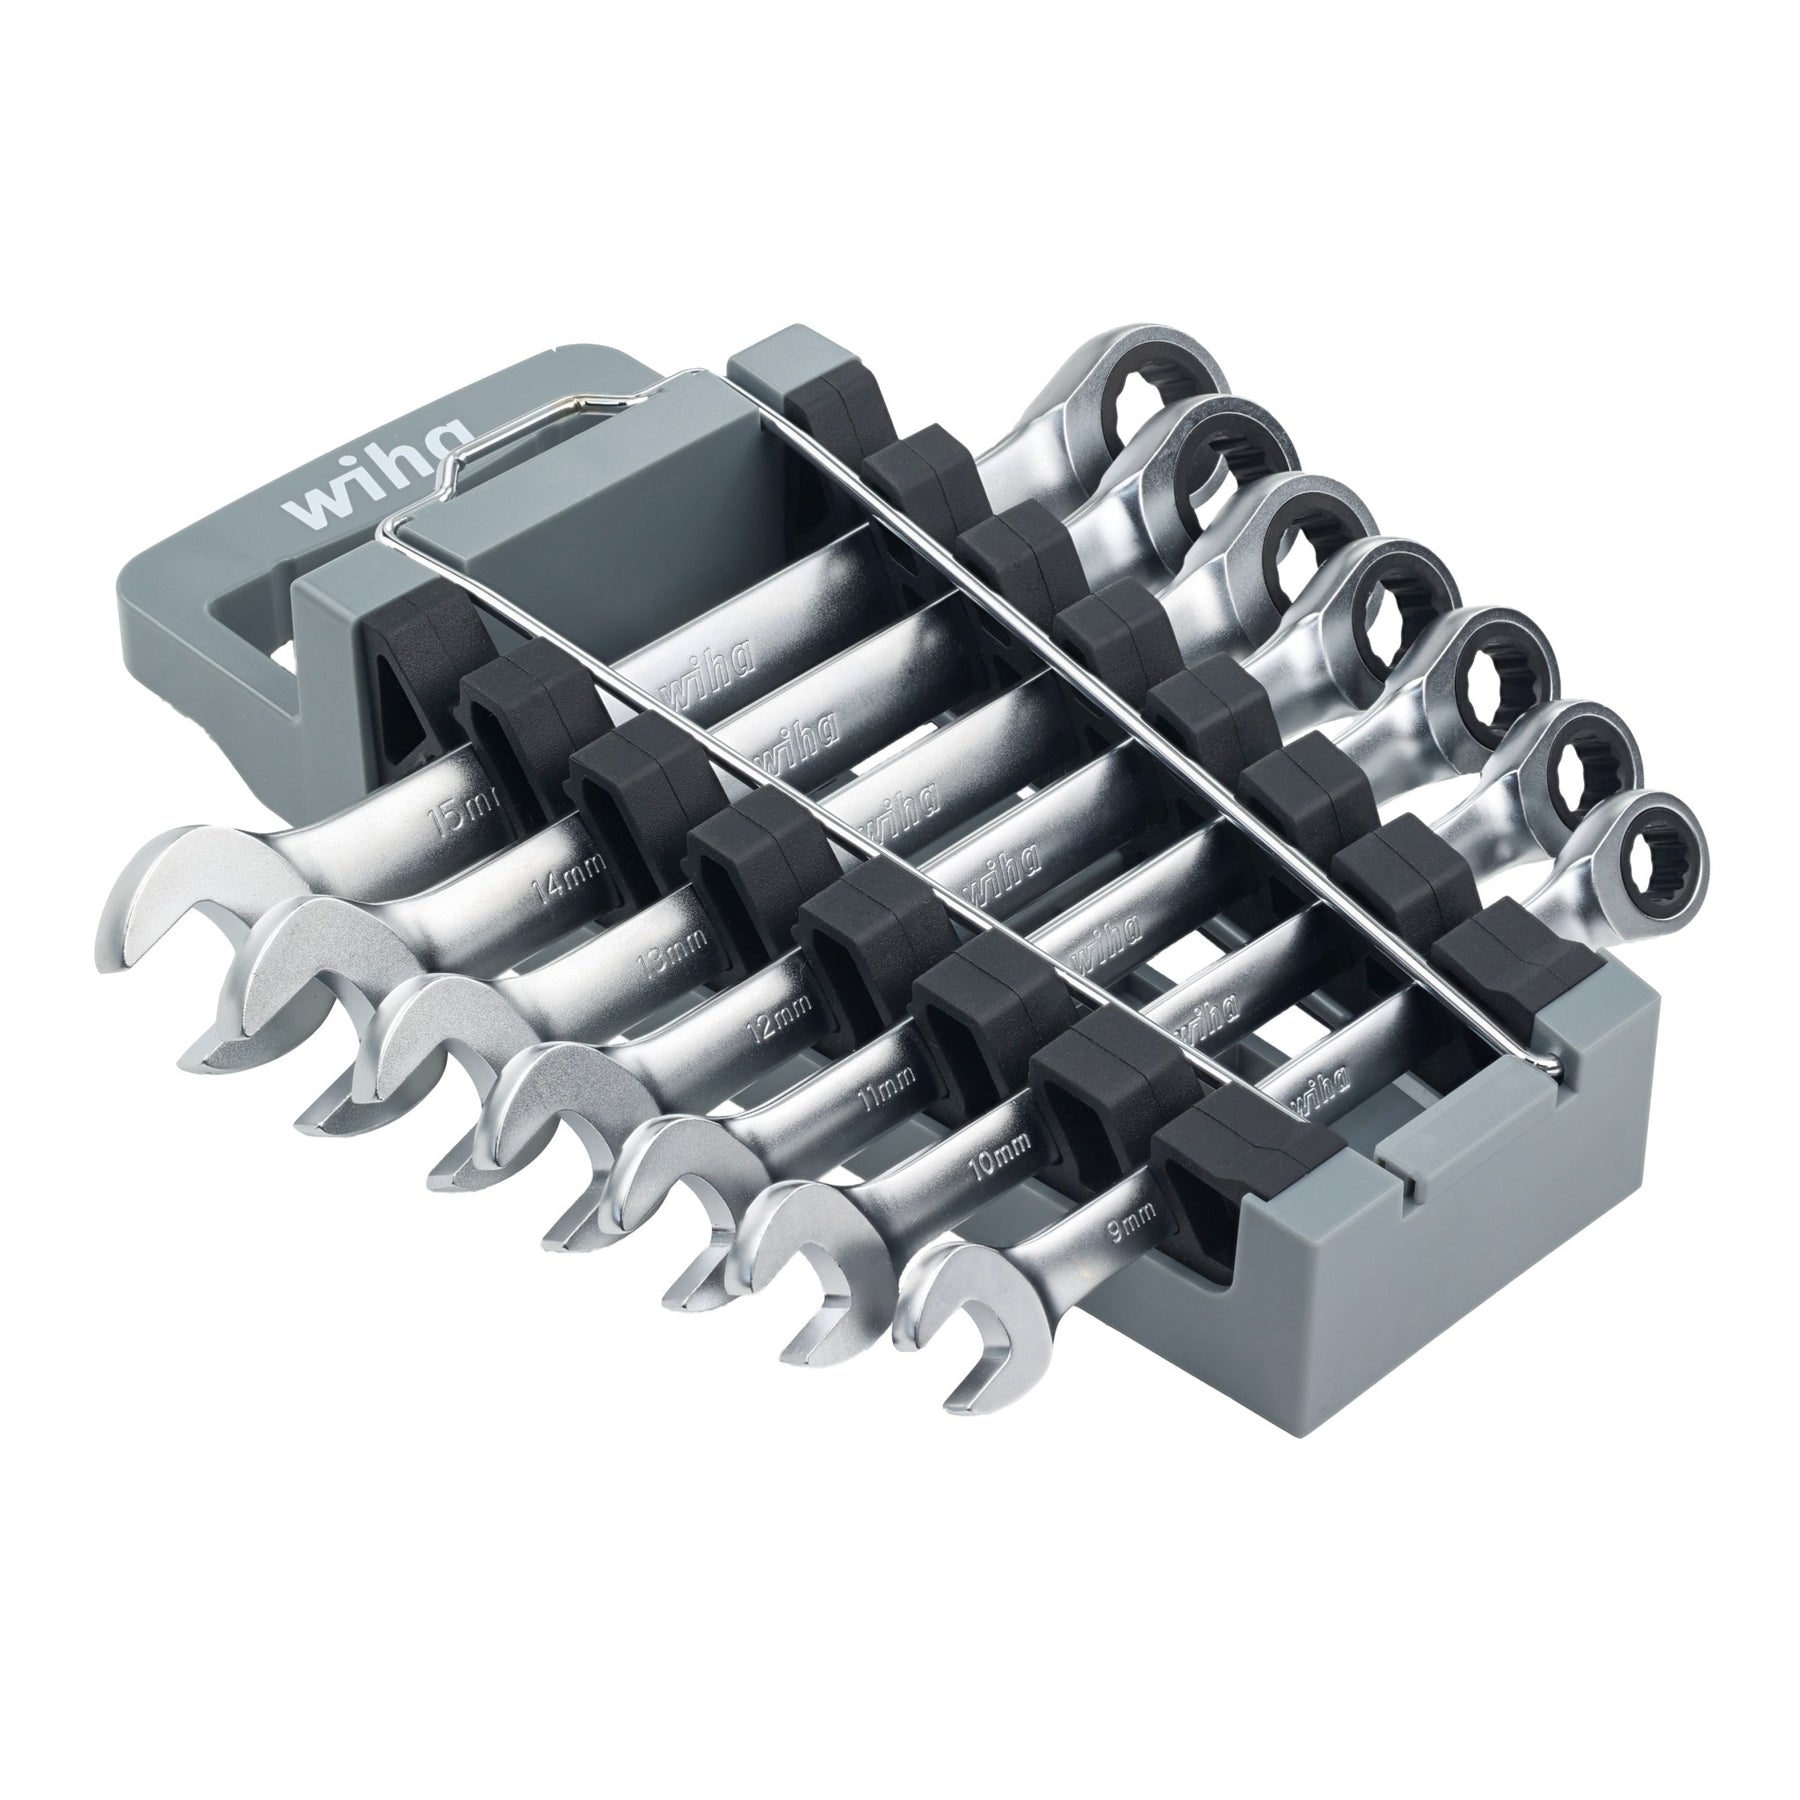 7 Piece Combination Ratchet Wrench Set - Metric